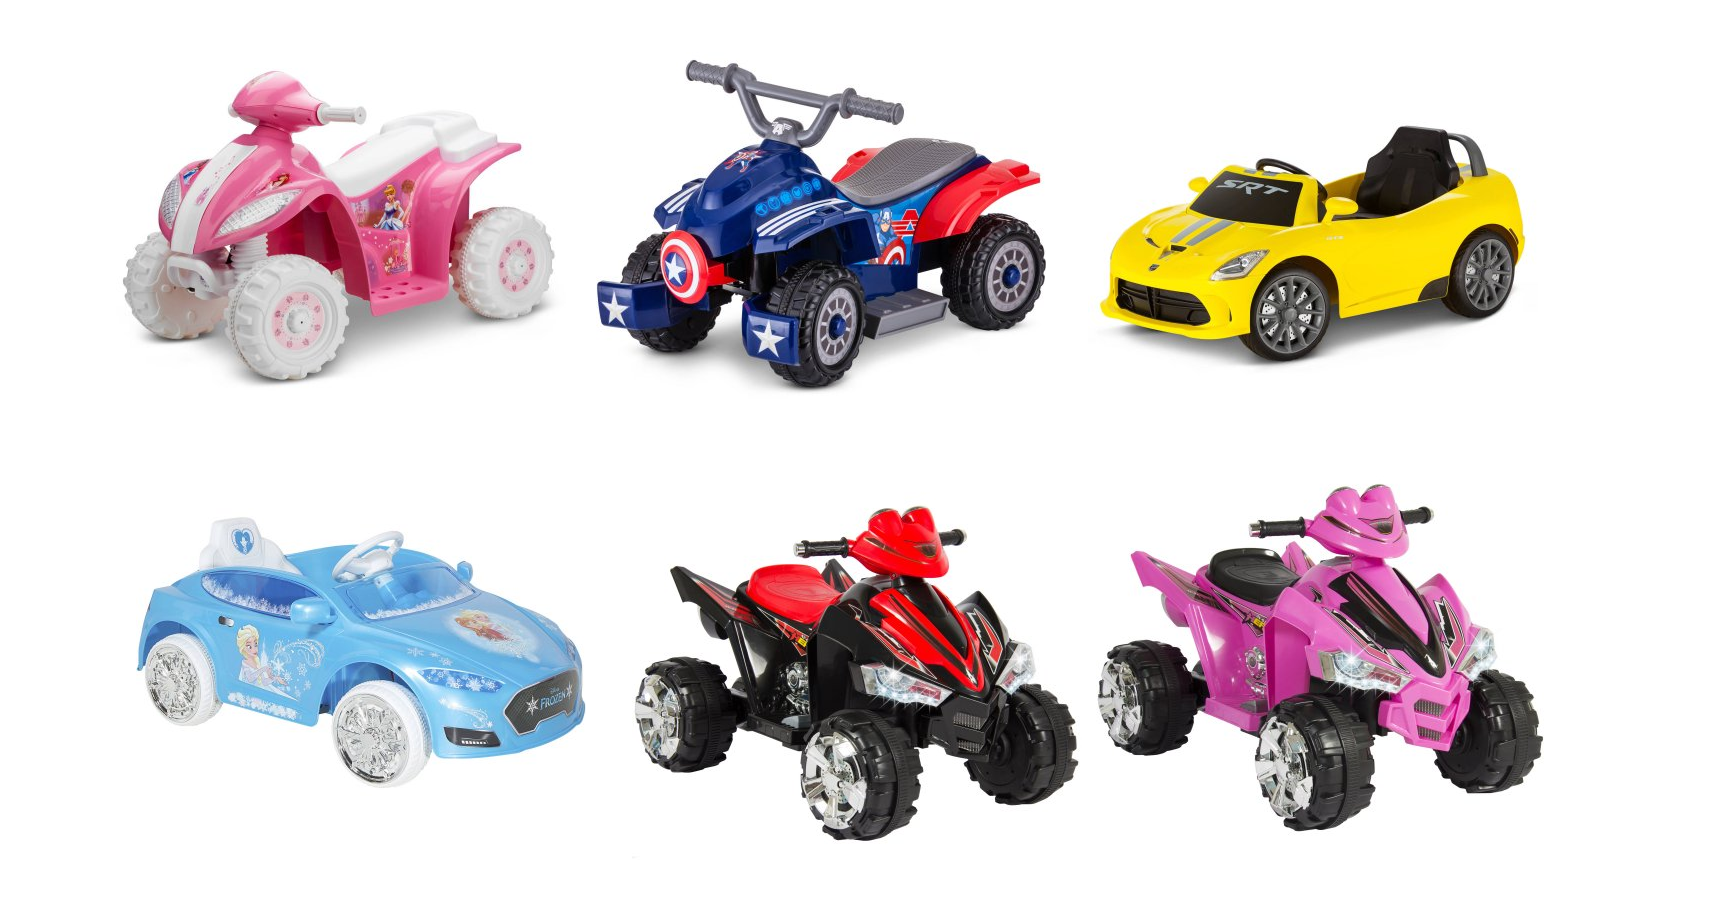 Walmart: Big Savings on Powered Ride-On Toys! Prices Start at $39.00!